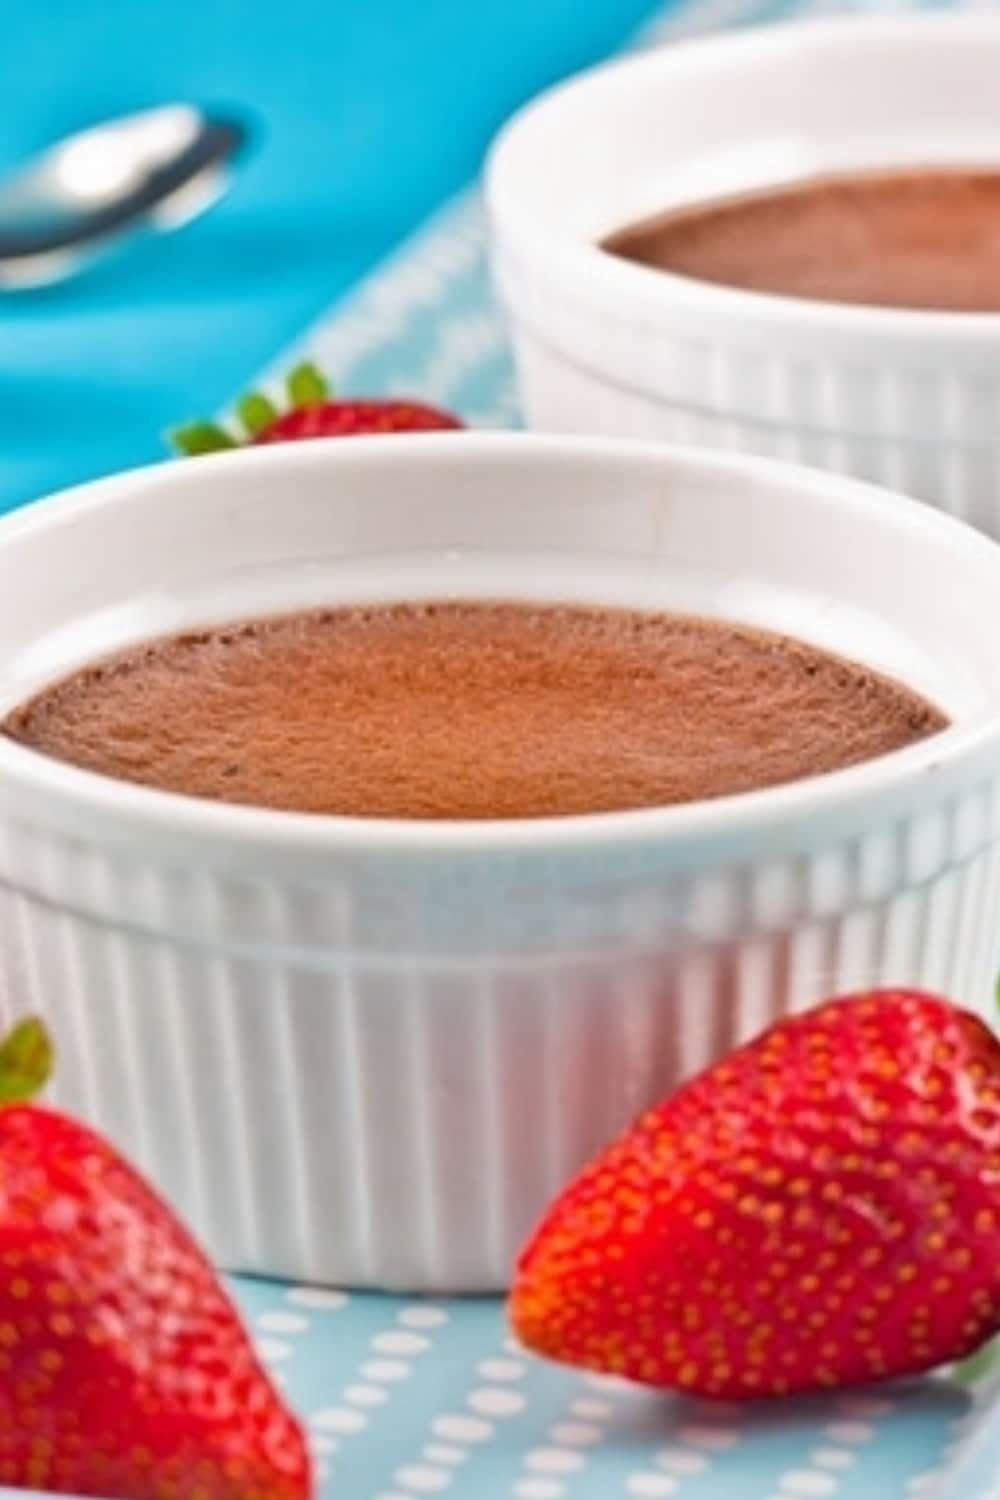 Chocolate Strawberry Pots de Crème